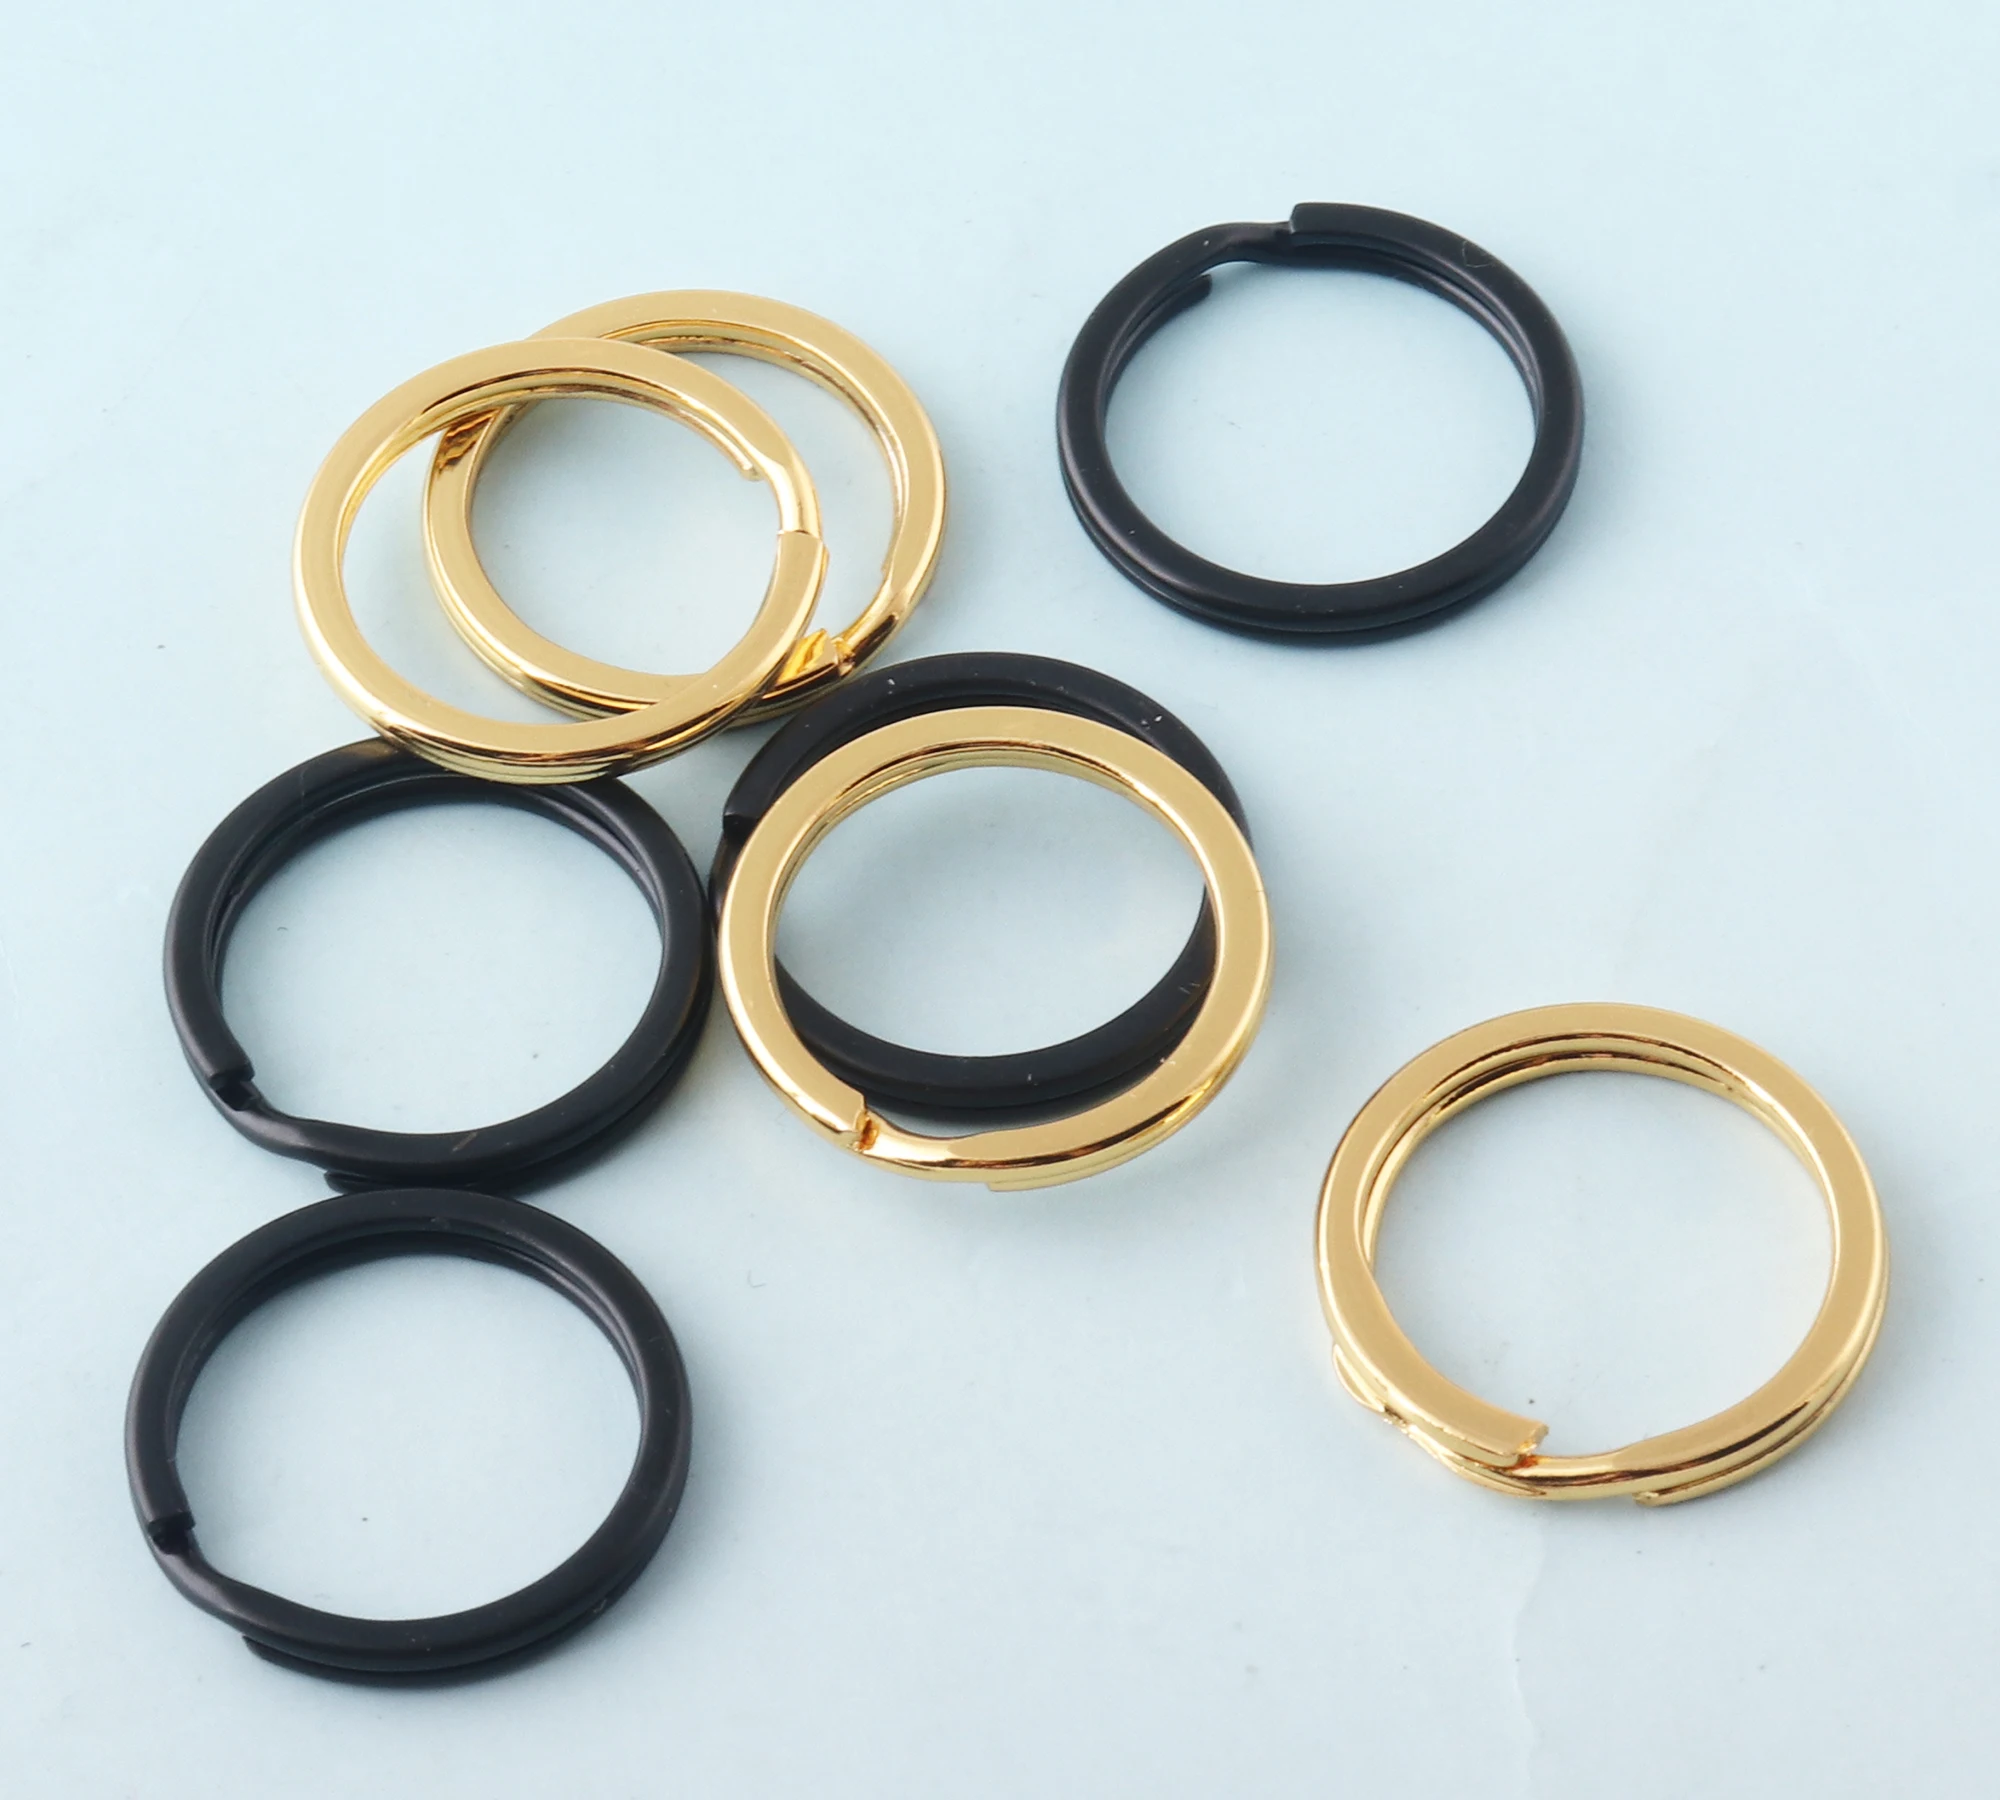 

20mm Mini split rings Flat Keyrings Black Key Ring O rings Metal Key Fob Ring for Key Chain Wholesale Findings